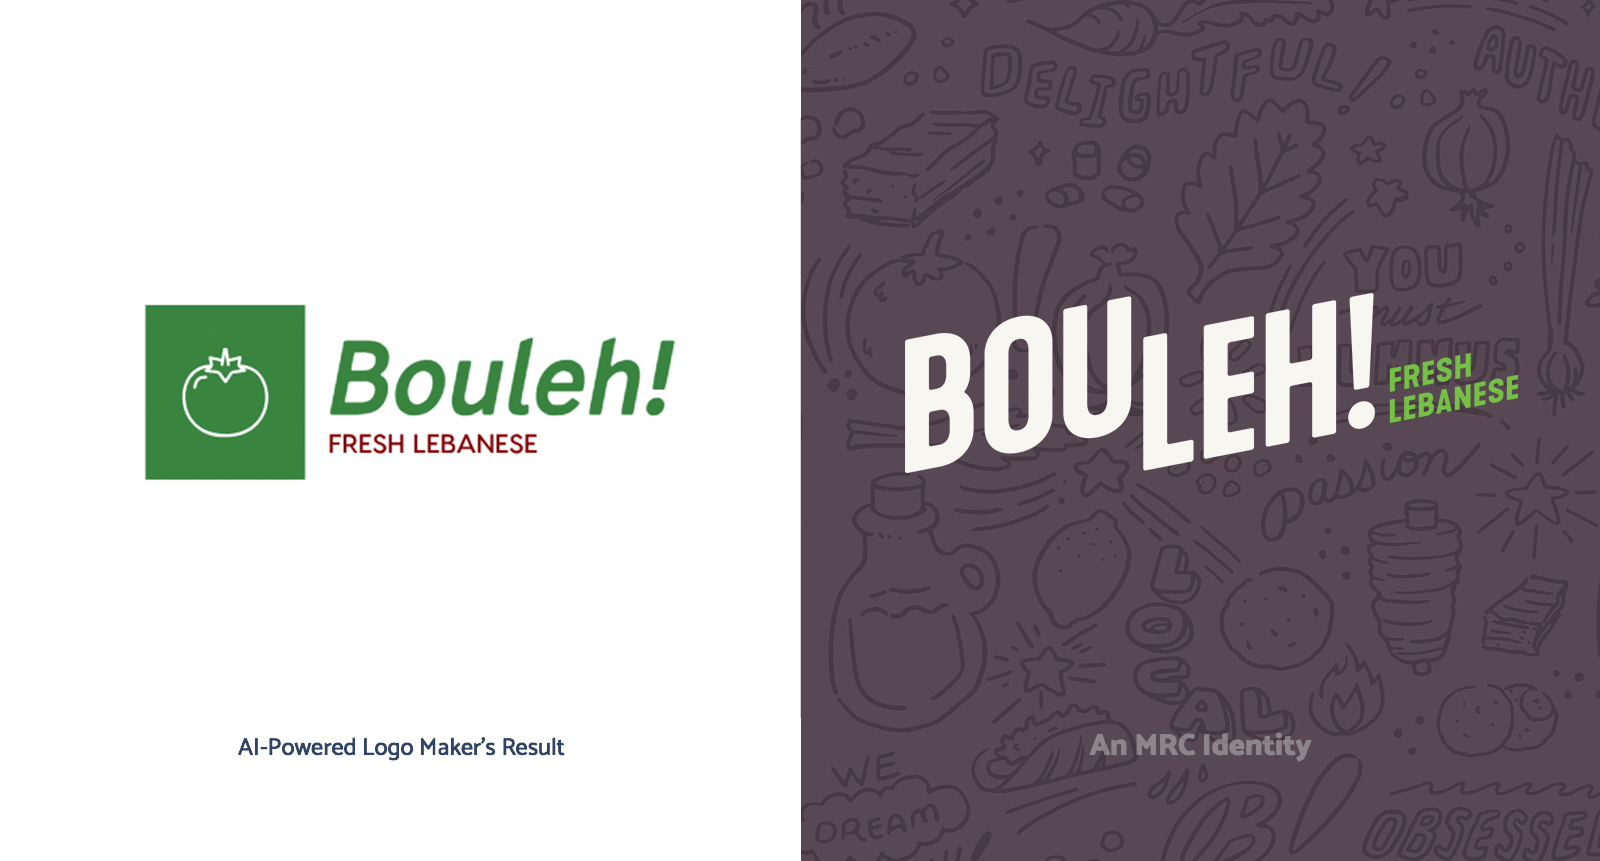 LogoJoy versus MRC Raleigh in a Logo Design Content for Bouleh! Fresh Lebanese